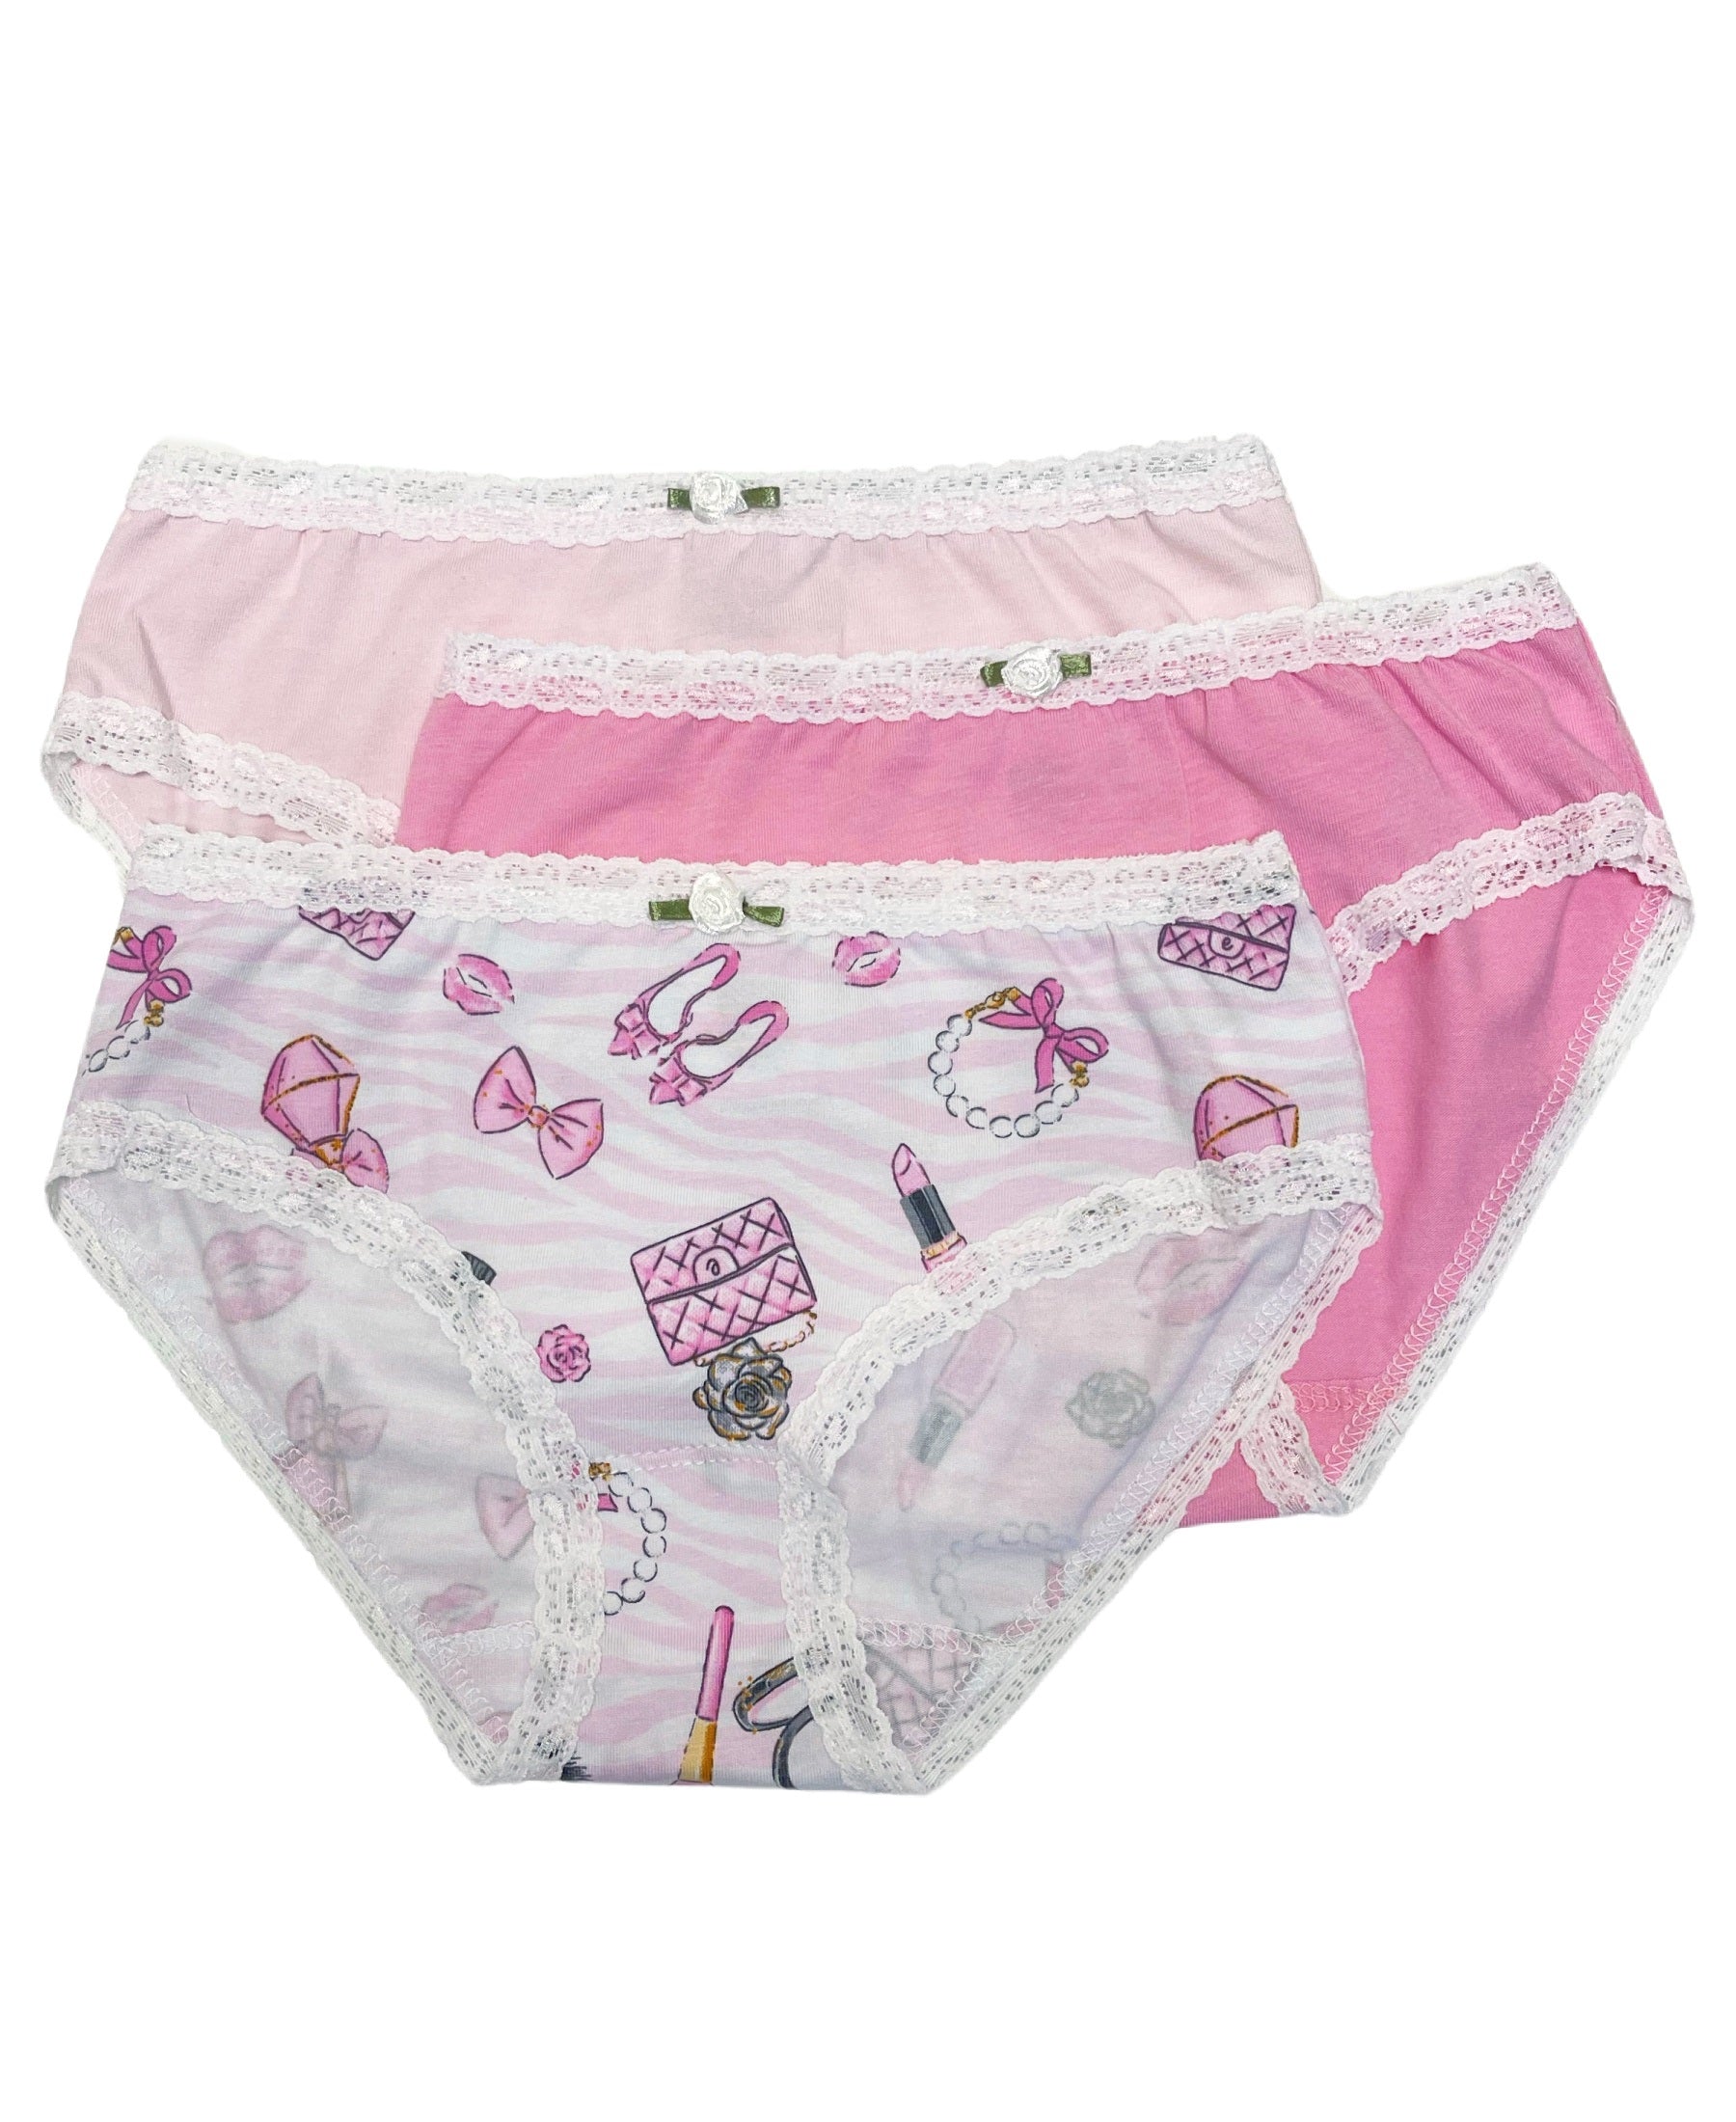 Sesame Street Toddler Boys 3 Pack Assorted Color Underwear Briefs